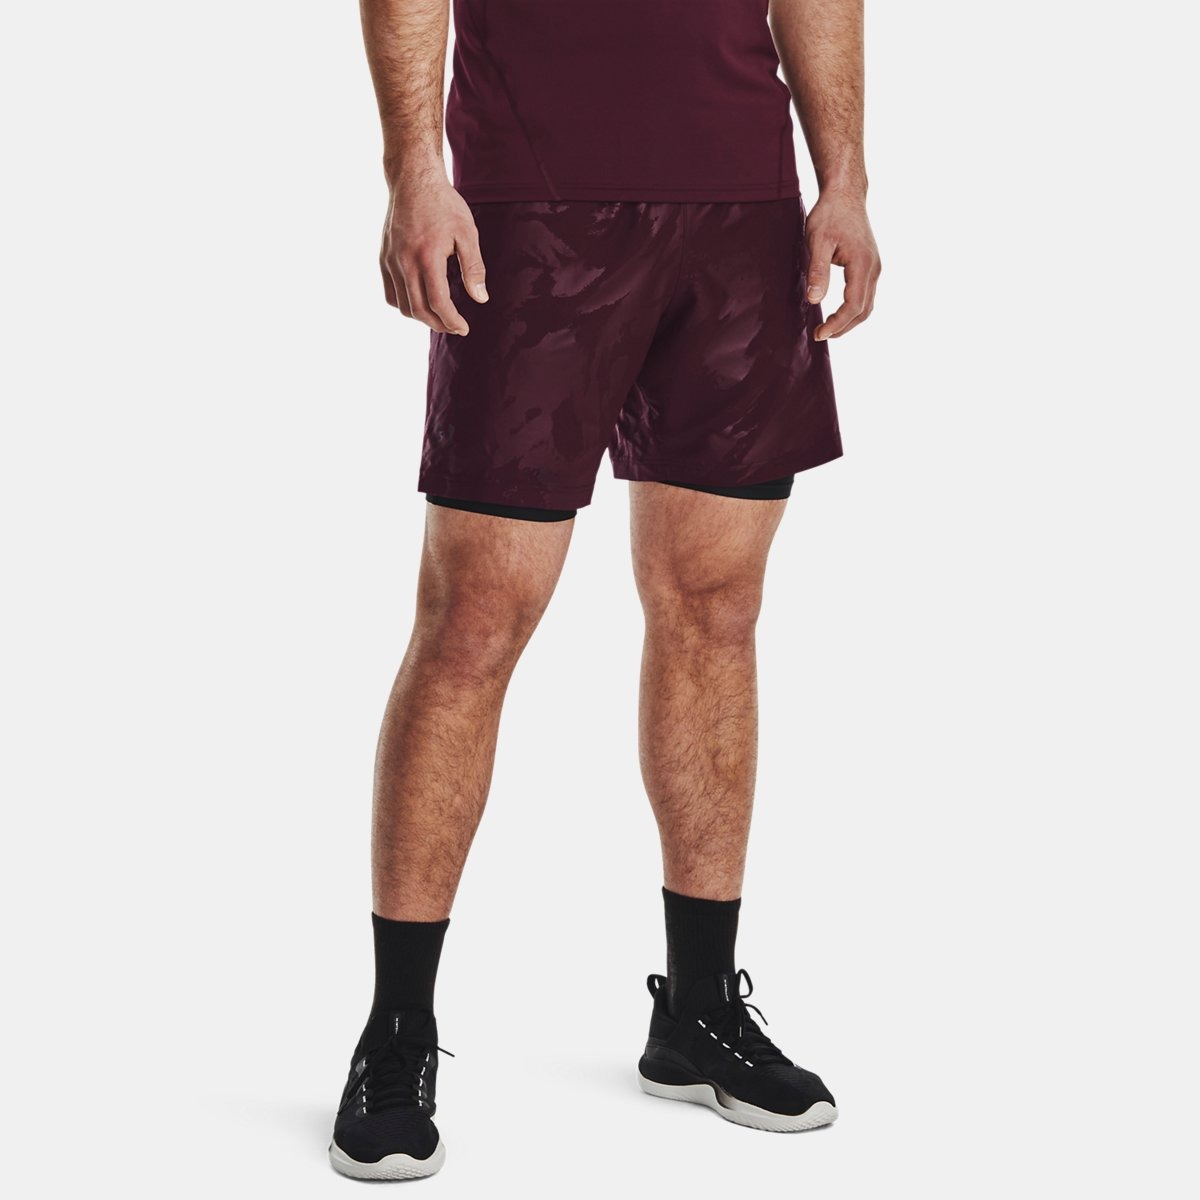 Under Armour Burgundy Shorts for Man GOOFASH